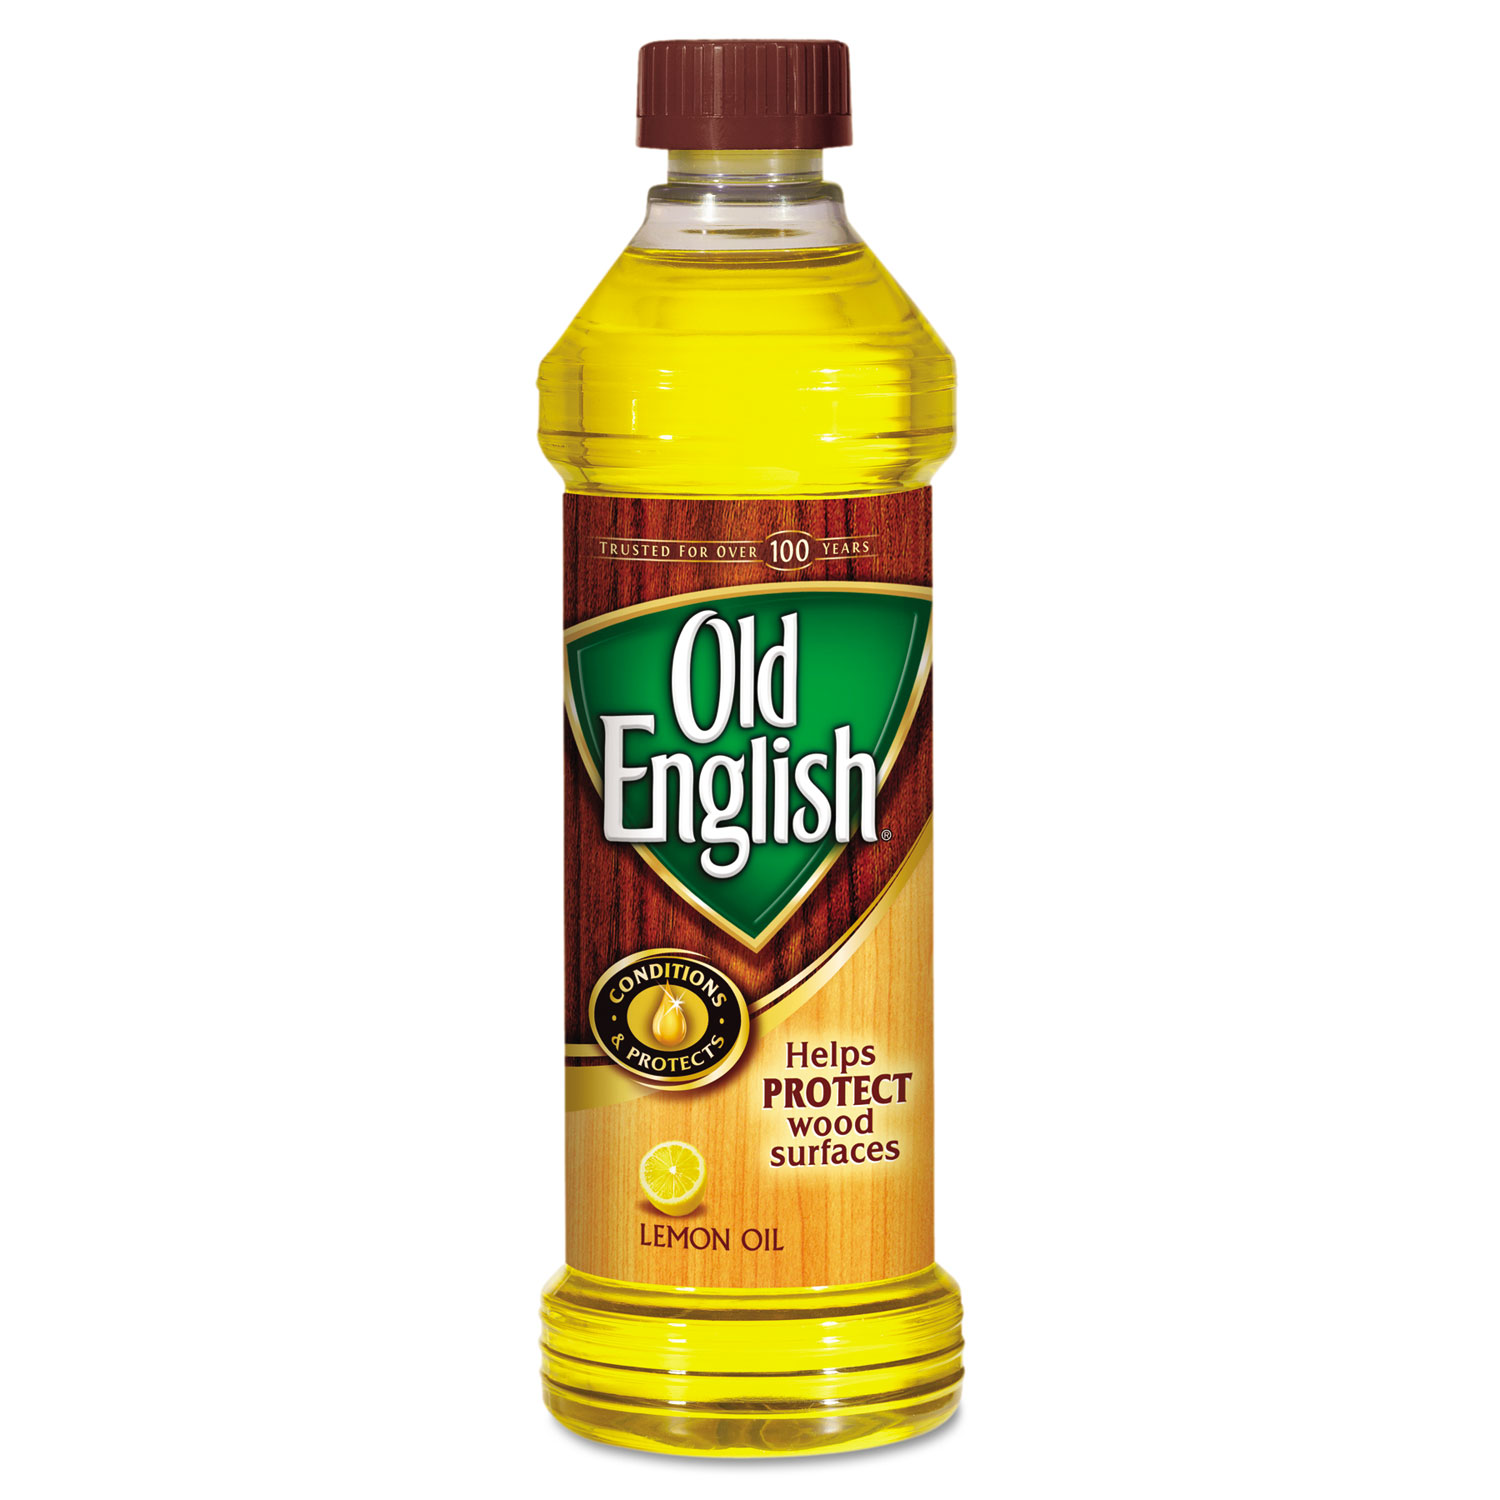  OLD ENGLISH 62338-75143 Lemon Oil, Furniture Polish, 16oz Bottle (RAC75143CT) 